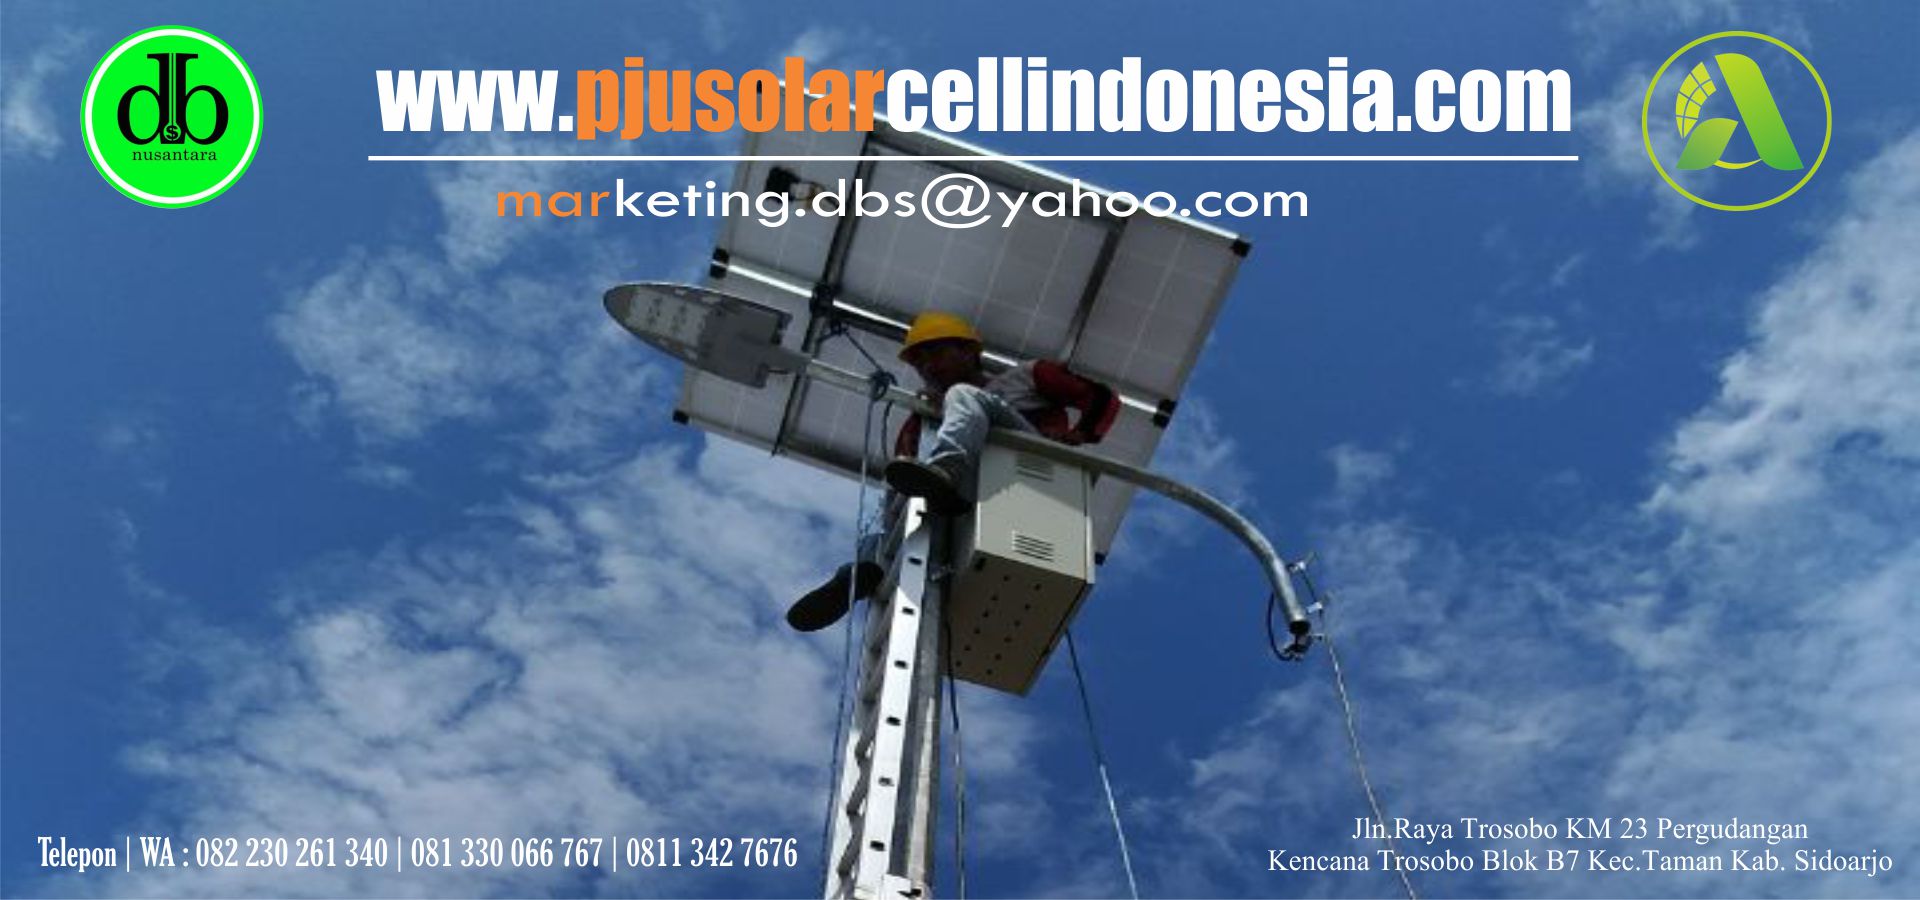 slider pju solar cell indonesia - 2